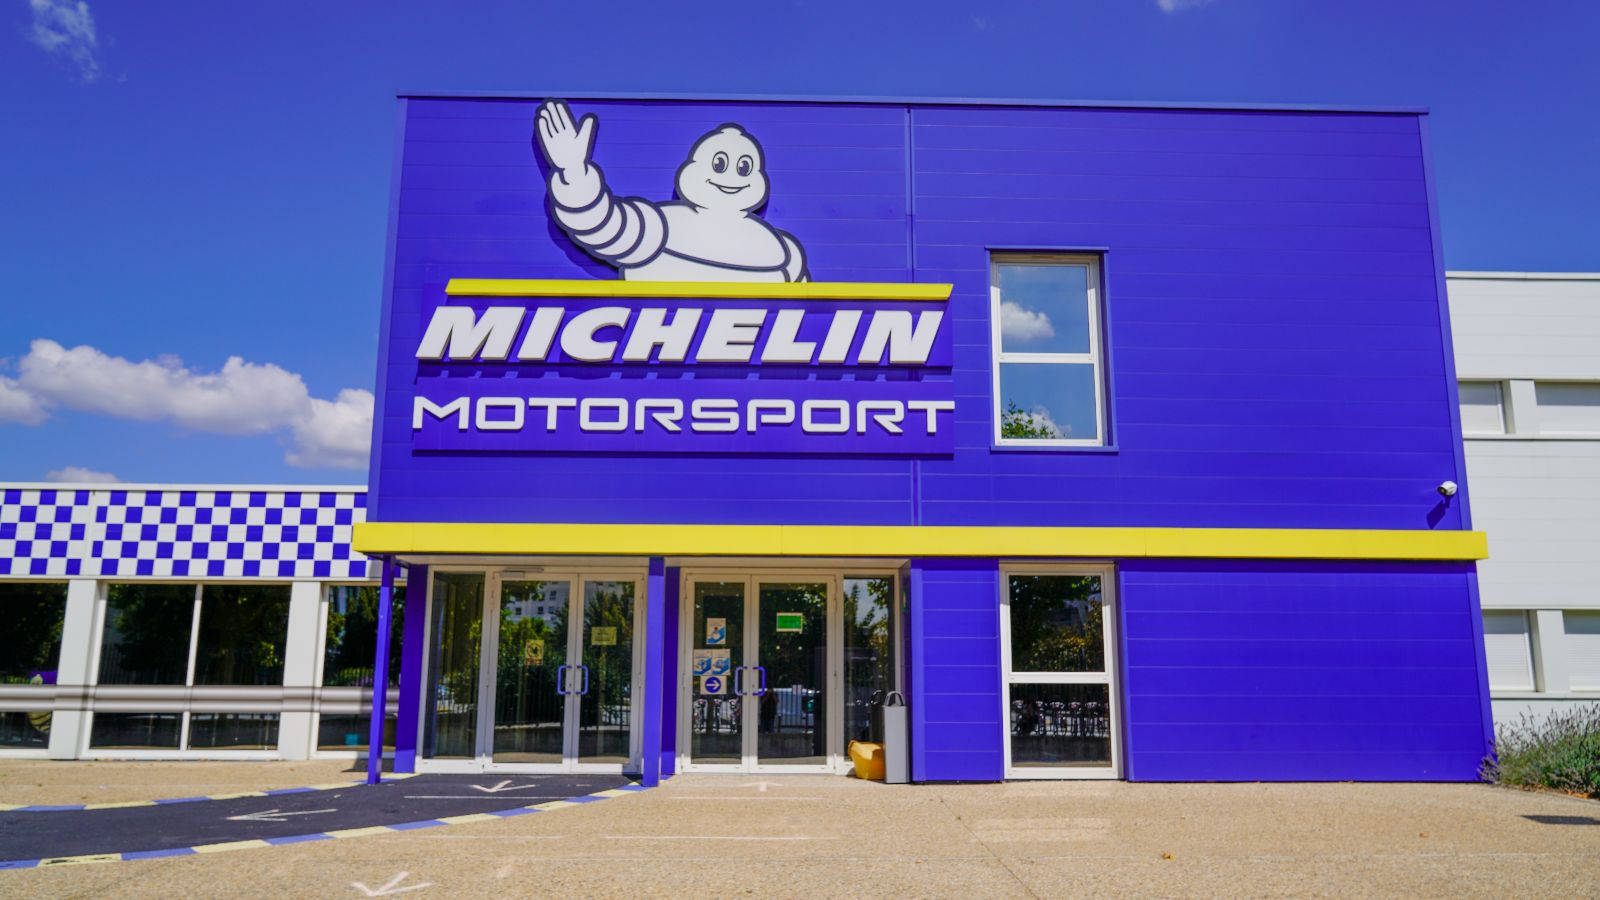 Michelin 1600 X 900 Wallpaper